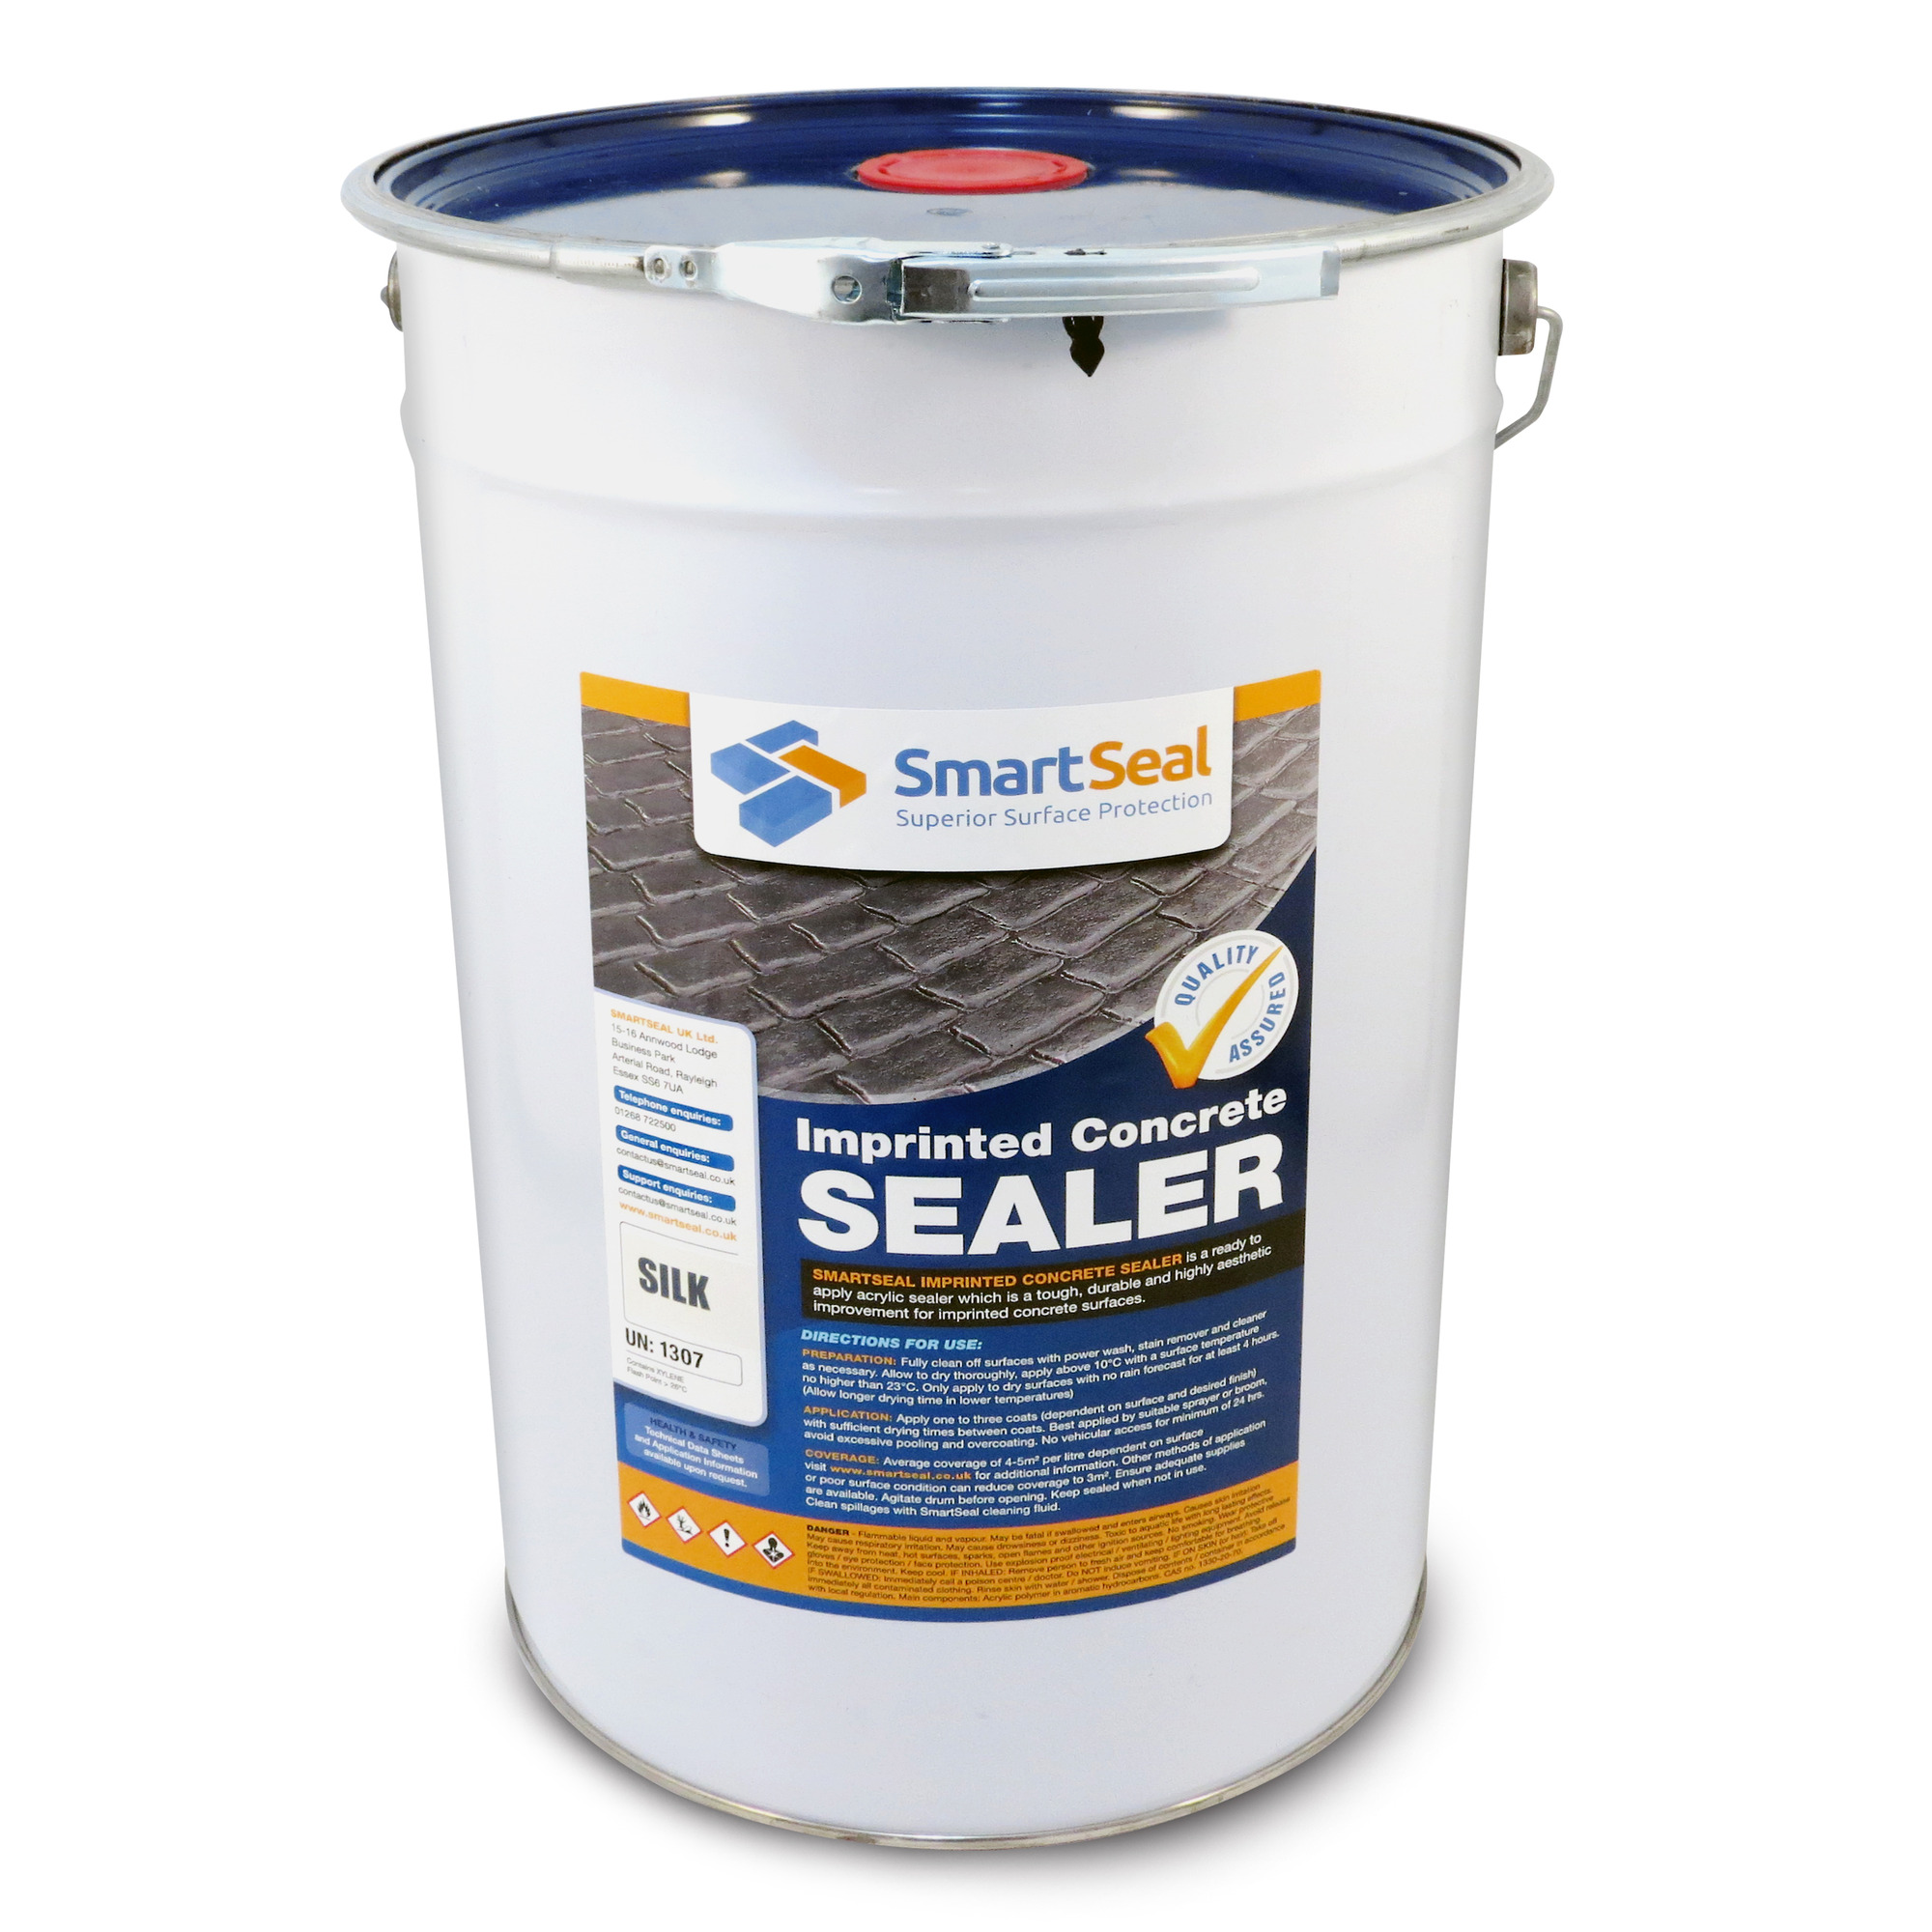 WET LOOK Imprinted Concrete Sealer | Imprinted Concrete Sealer SILK